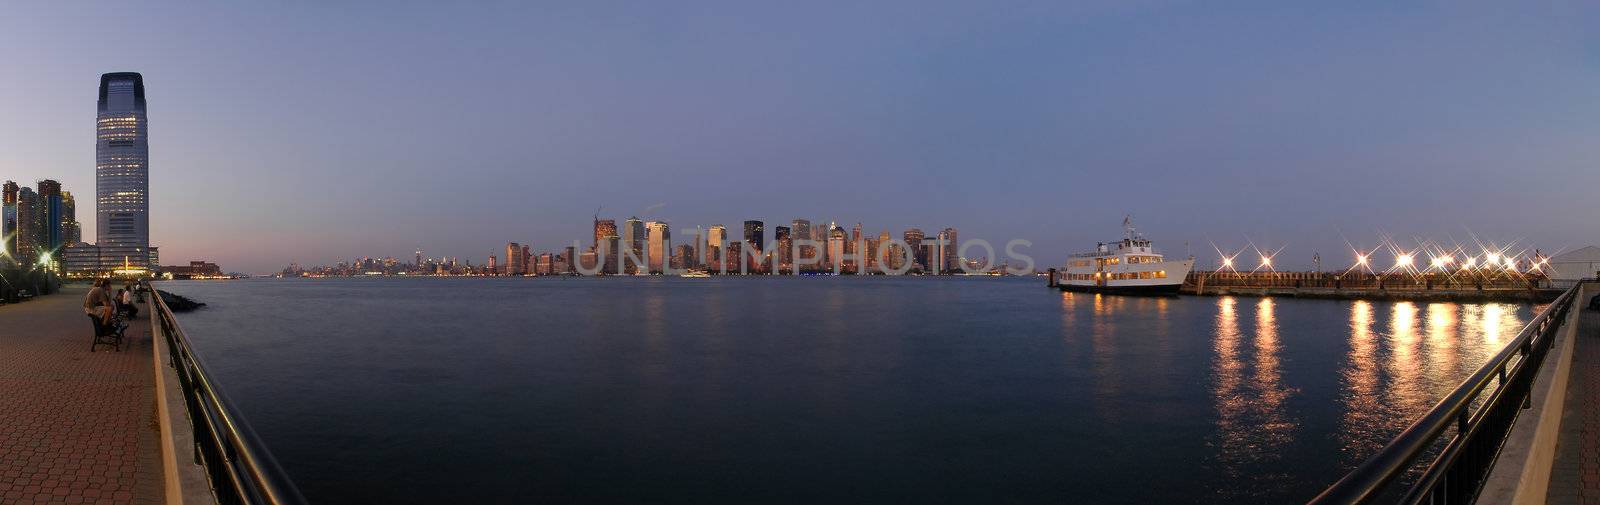 night panorama photo of new york cityscape, photo taken from jersey city, 